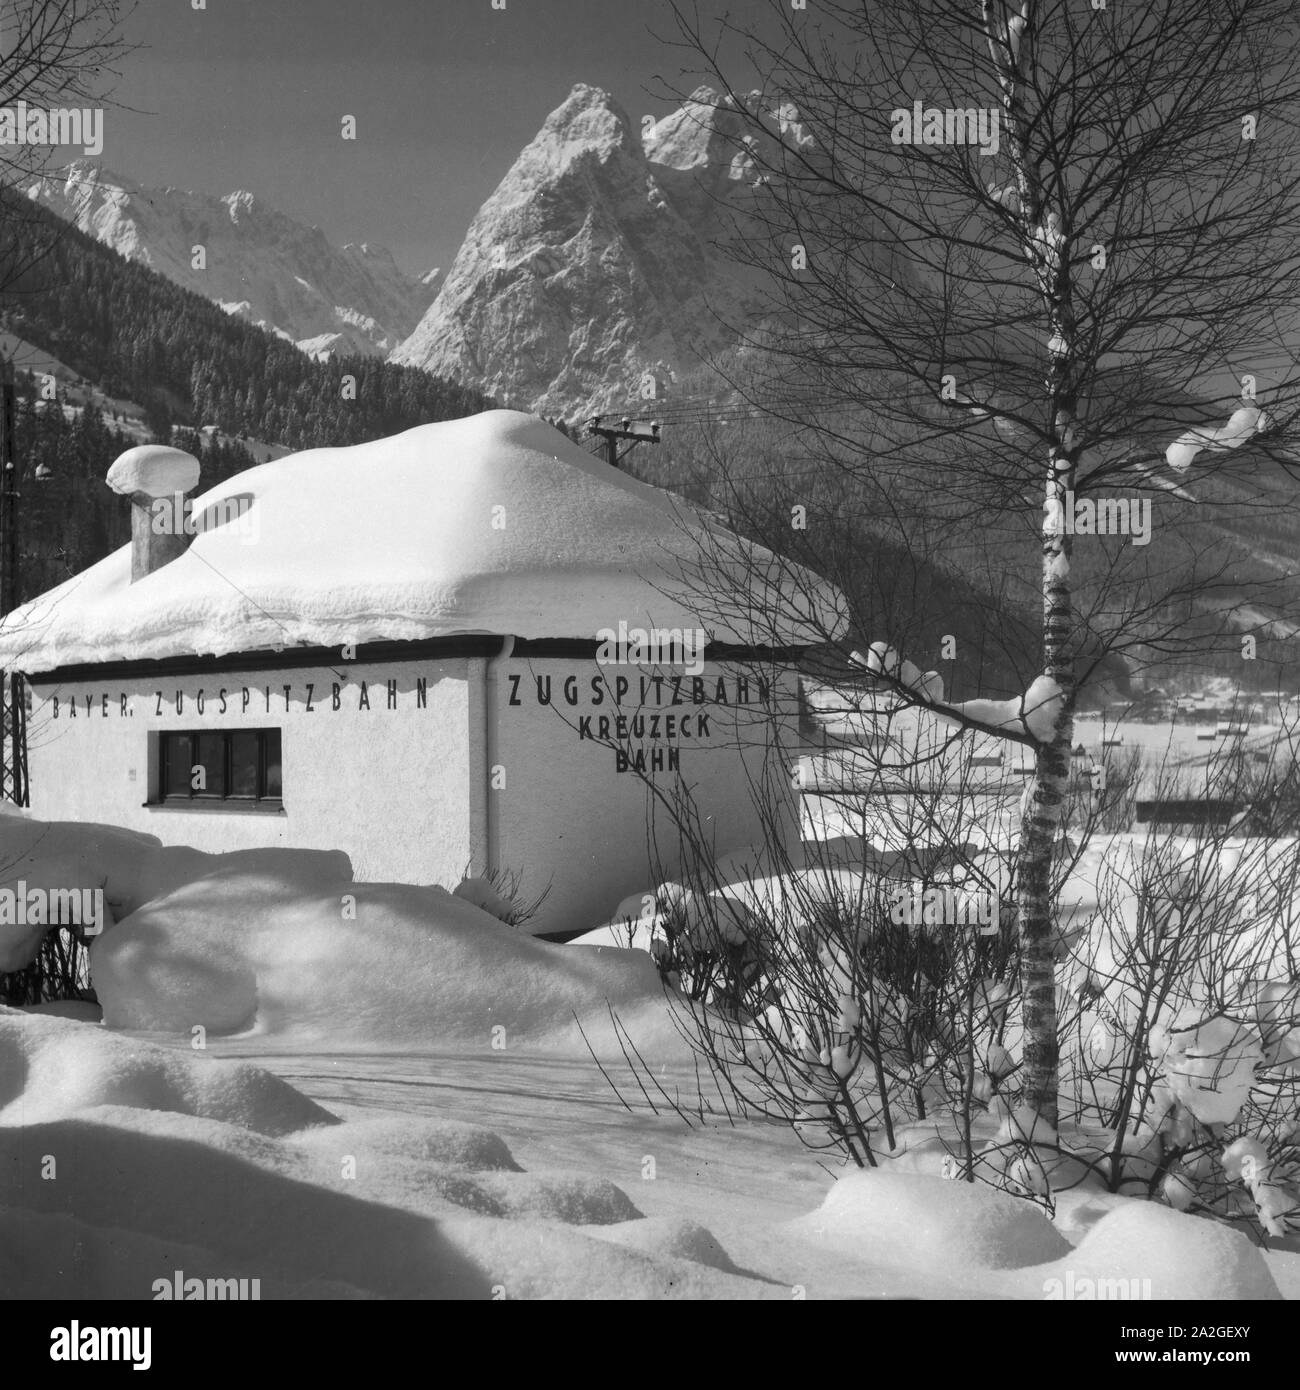 Estación, Deutschland Zugspitzbahn der 1930er Jahre. Estatina del tren de montaña Zugspitzbahn, Alemania 1930. Foto de stock